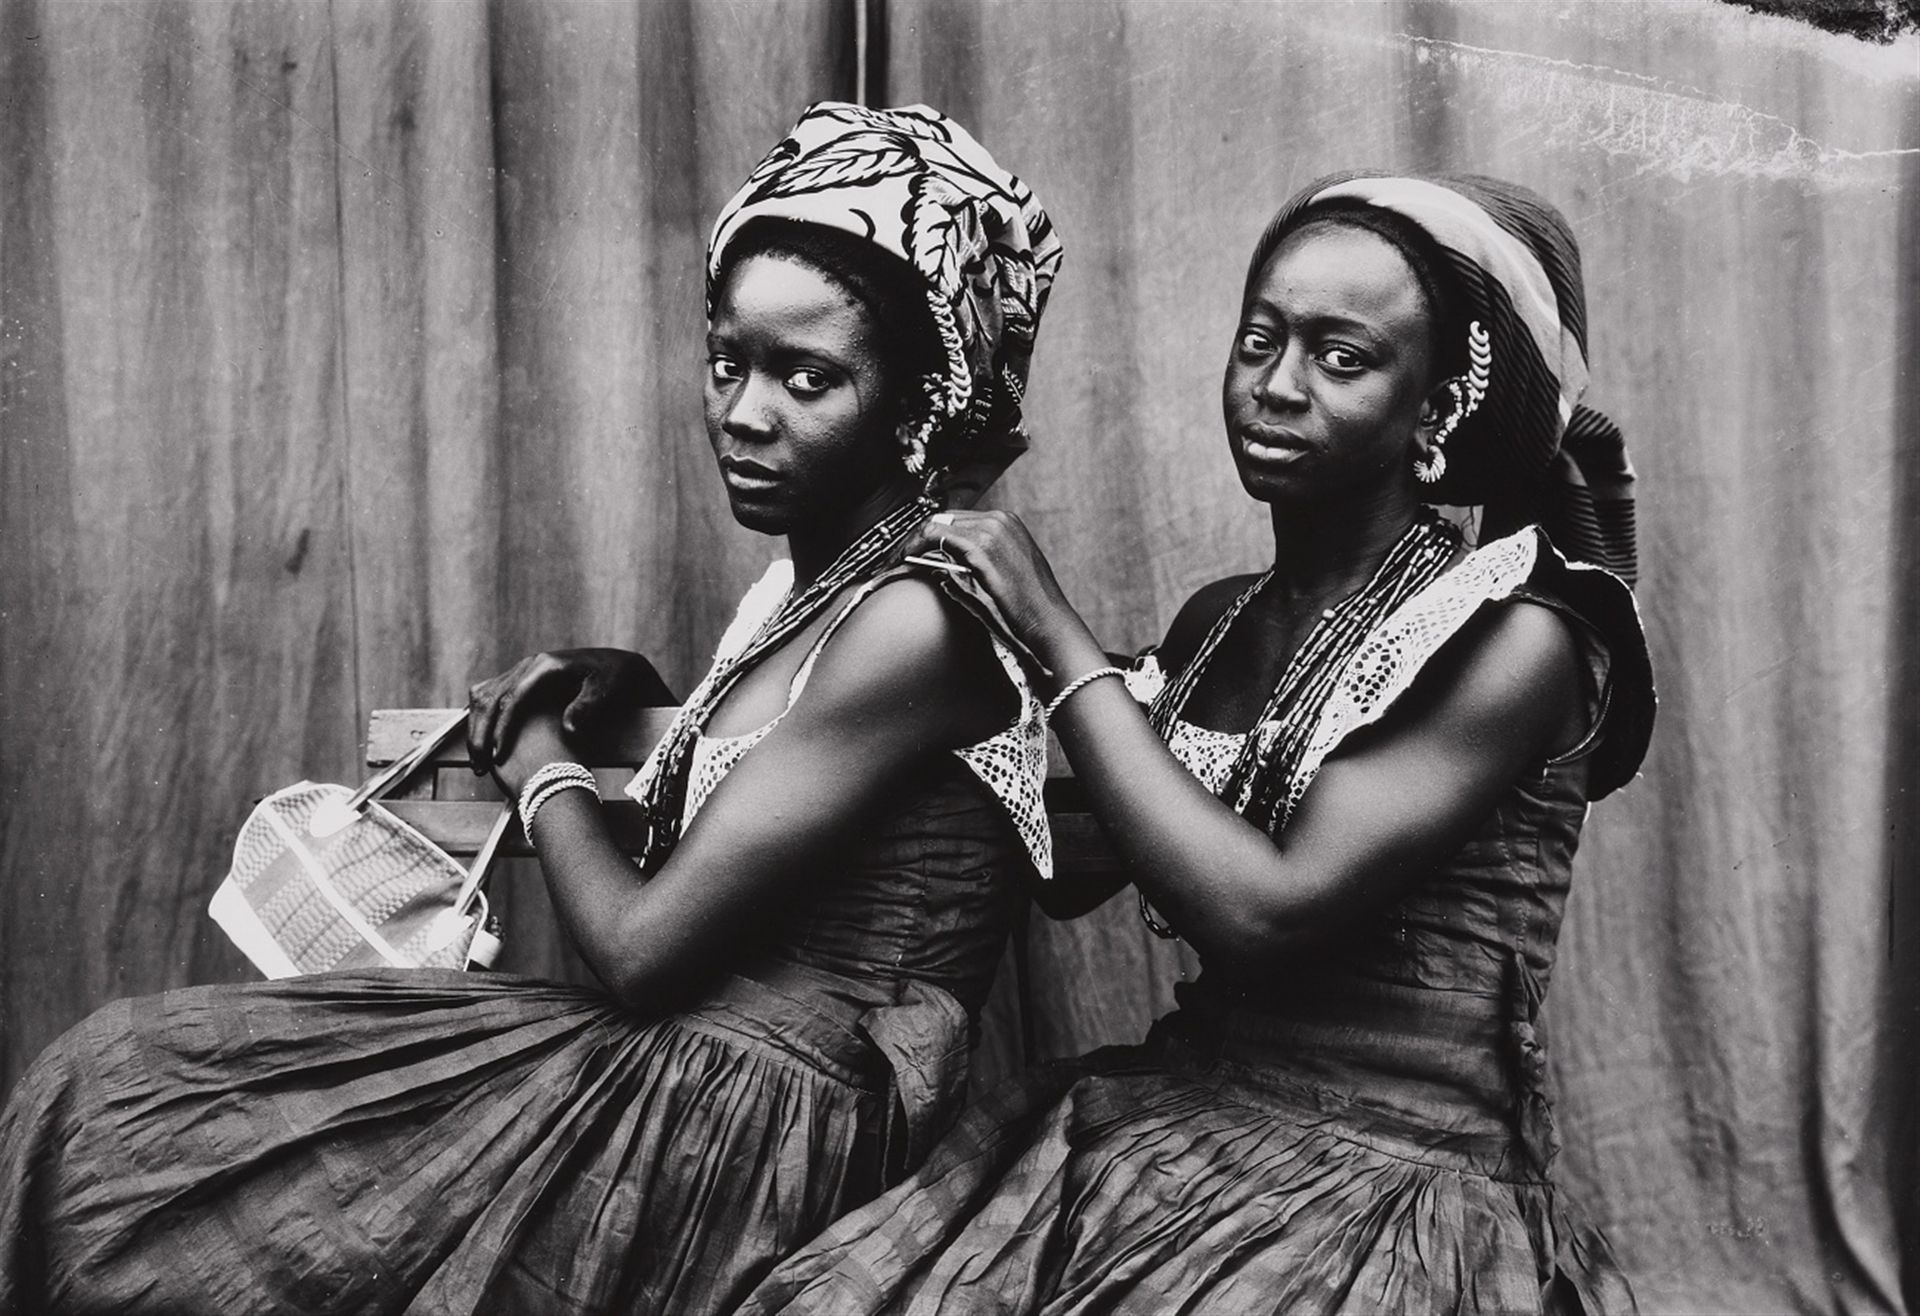 Seydou Keïta Seydou Keïta



Sans titre

1952 - 1955



Tirage gélatino-argentiq&hellip;